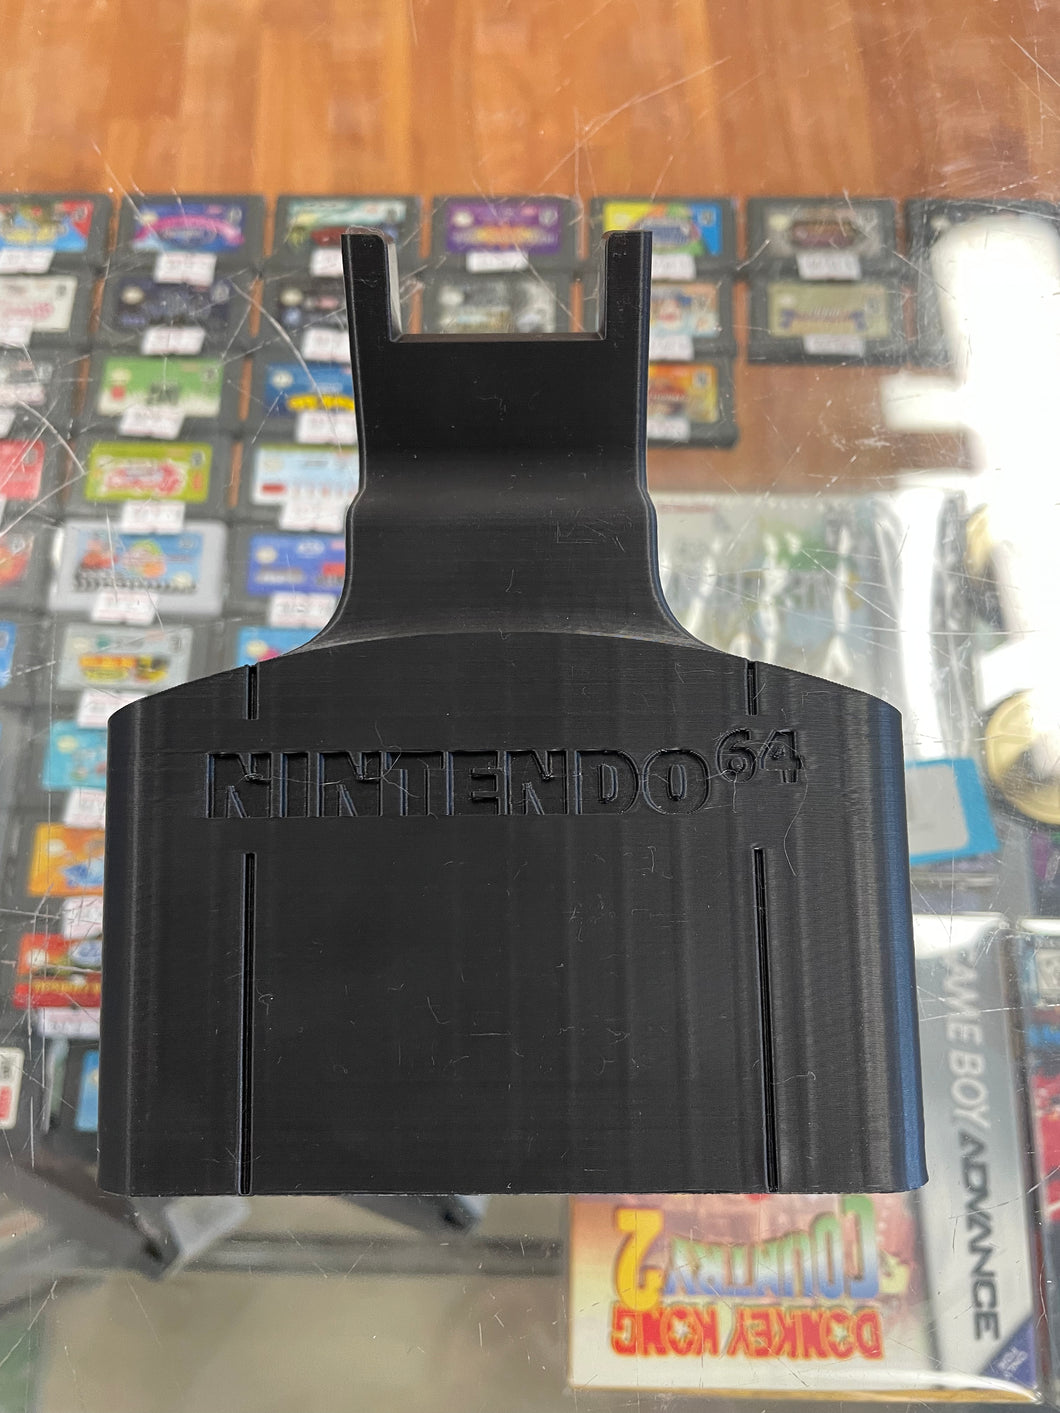 3D Printed Nintendo 64 Controller Insert Stand